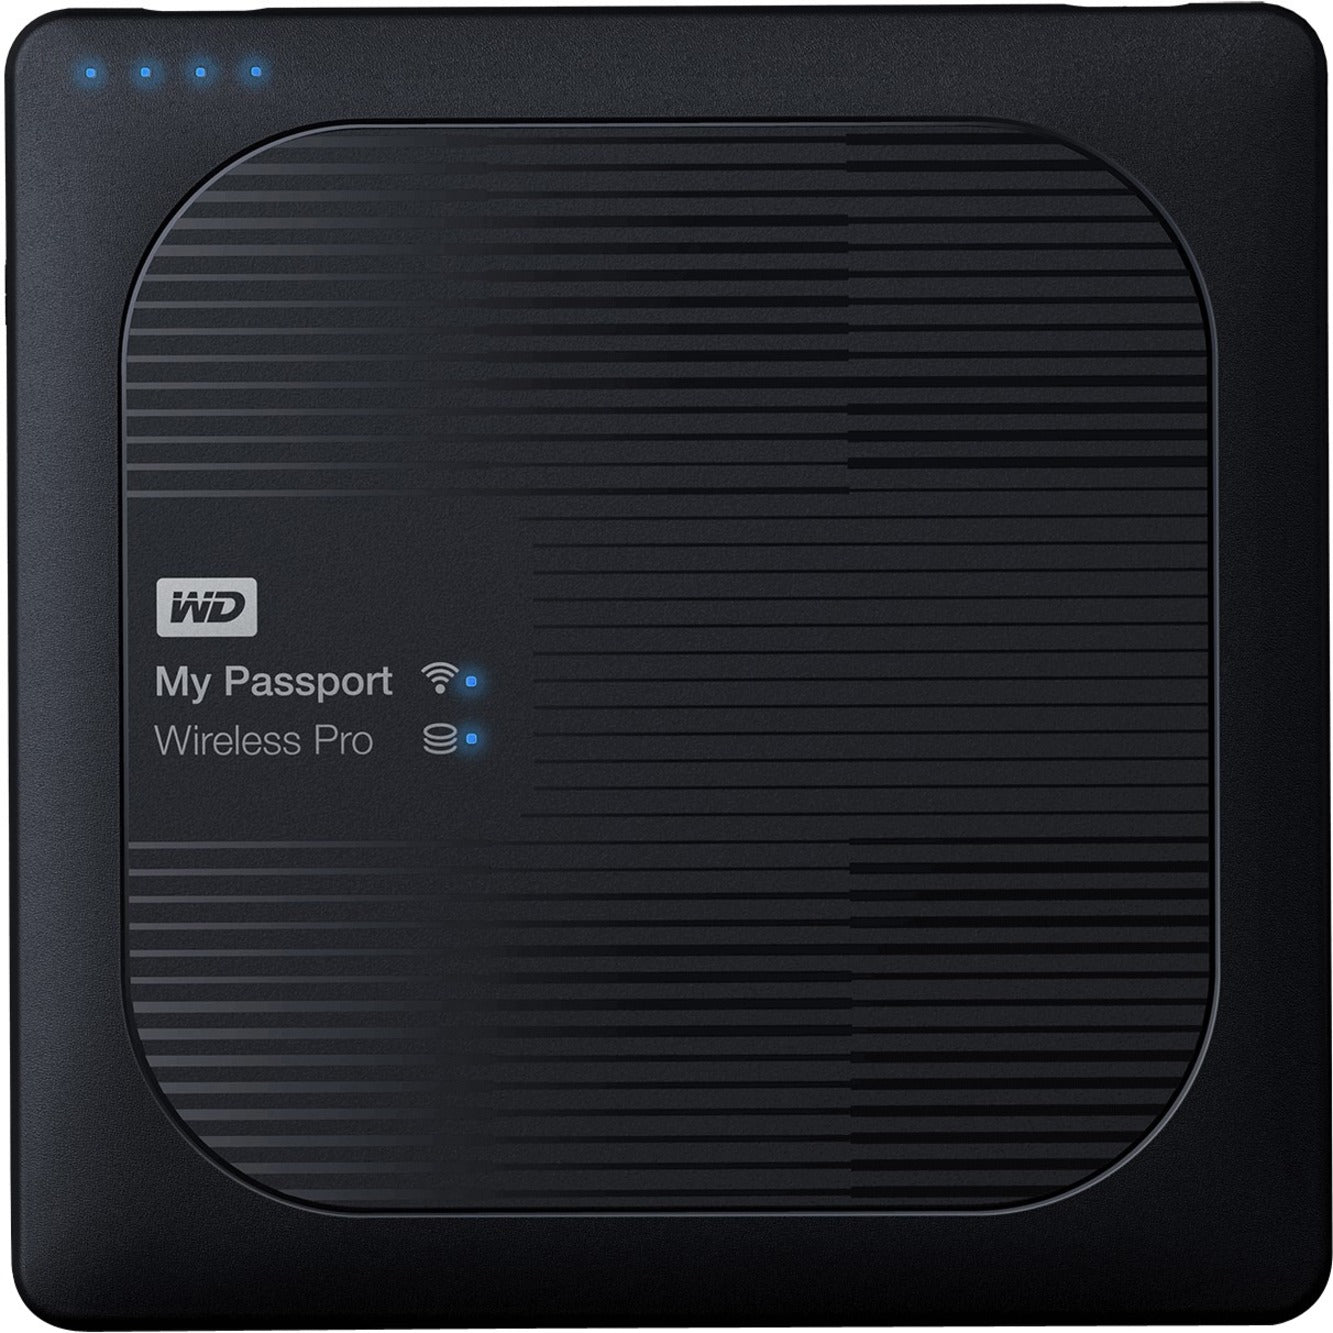 WD WDBVPL0010BBK-NESN My Passport Wireless Pro 1TB Network Hard Drive, USB 3.0, Wireless LAN, 2 Year Warranty